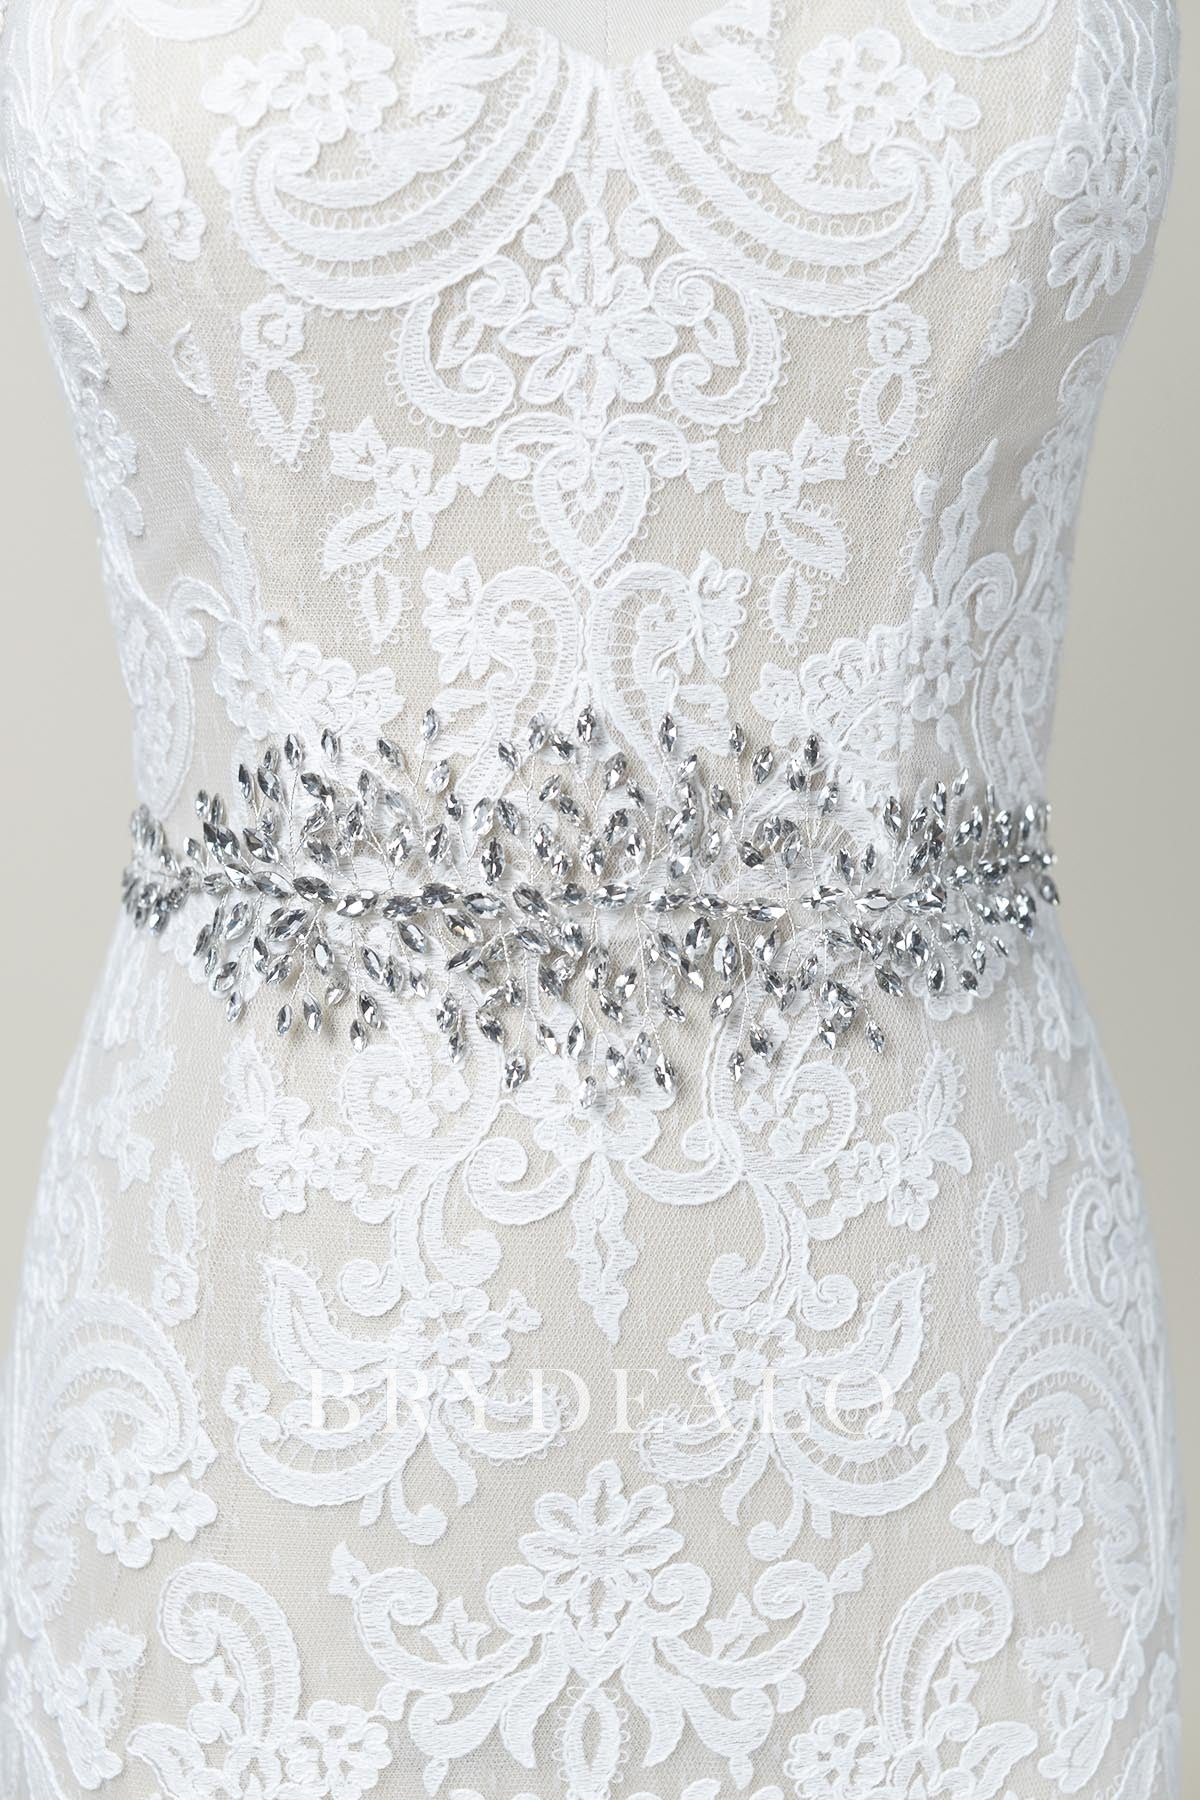 Fashion Sparkly Silver Crystal Vine Bridal Sash